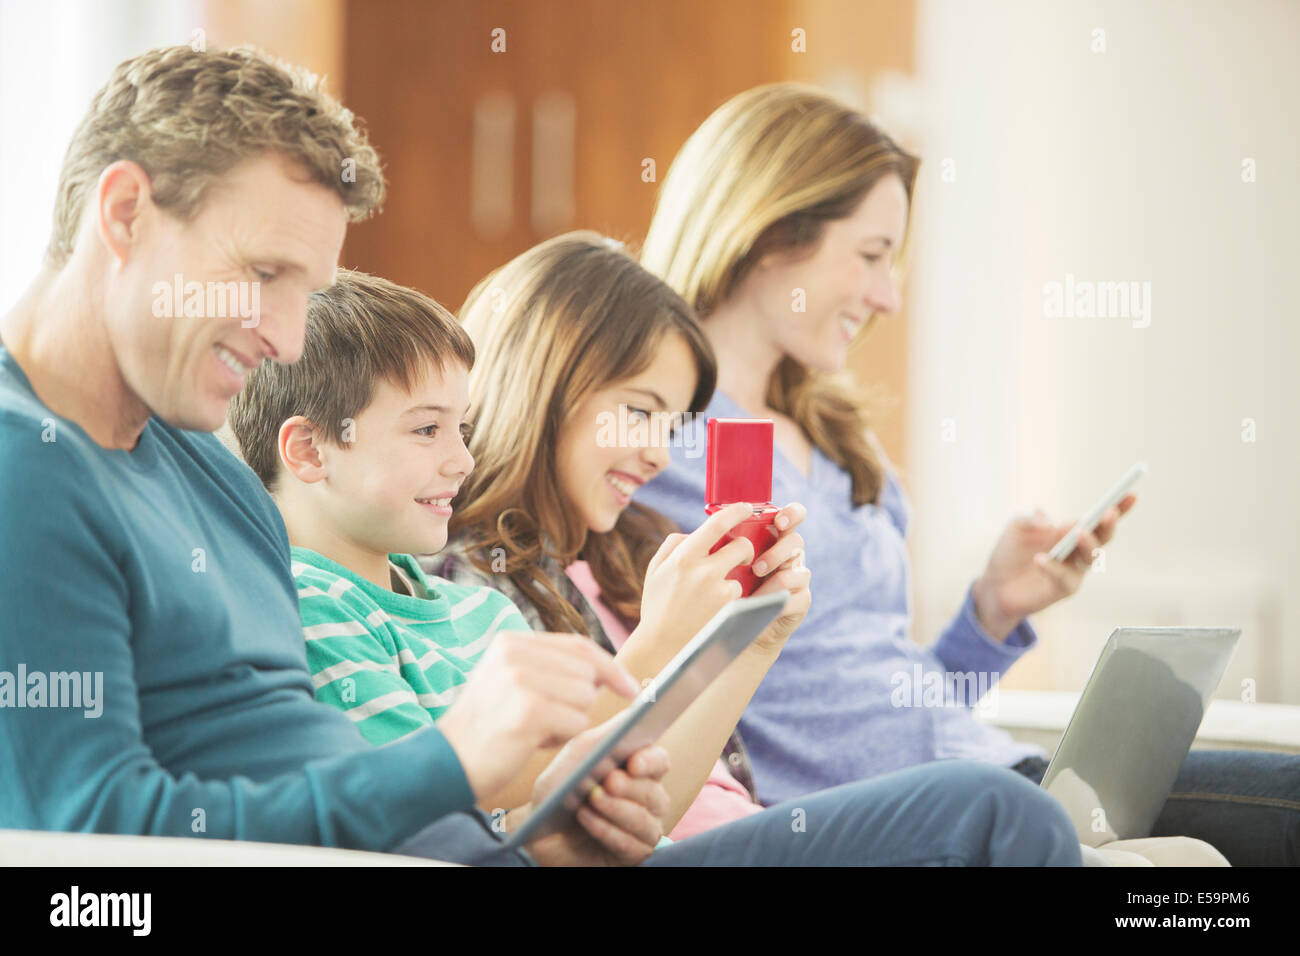 Family using technology on sofa Stock Photo